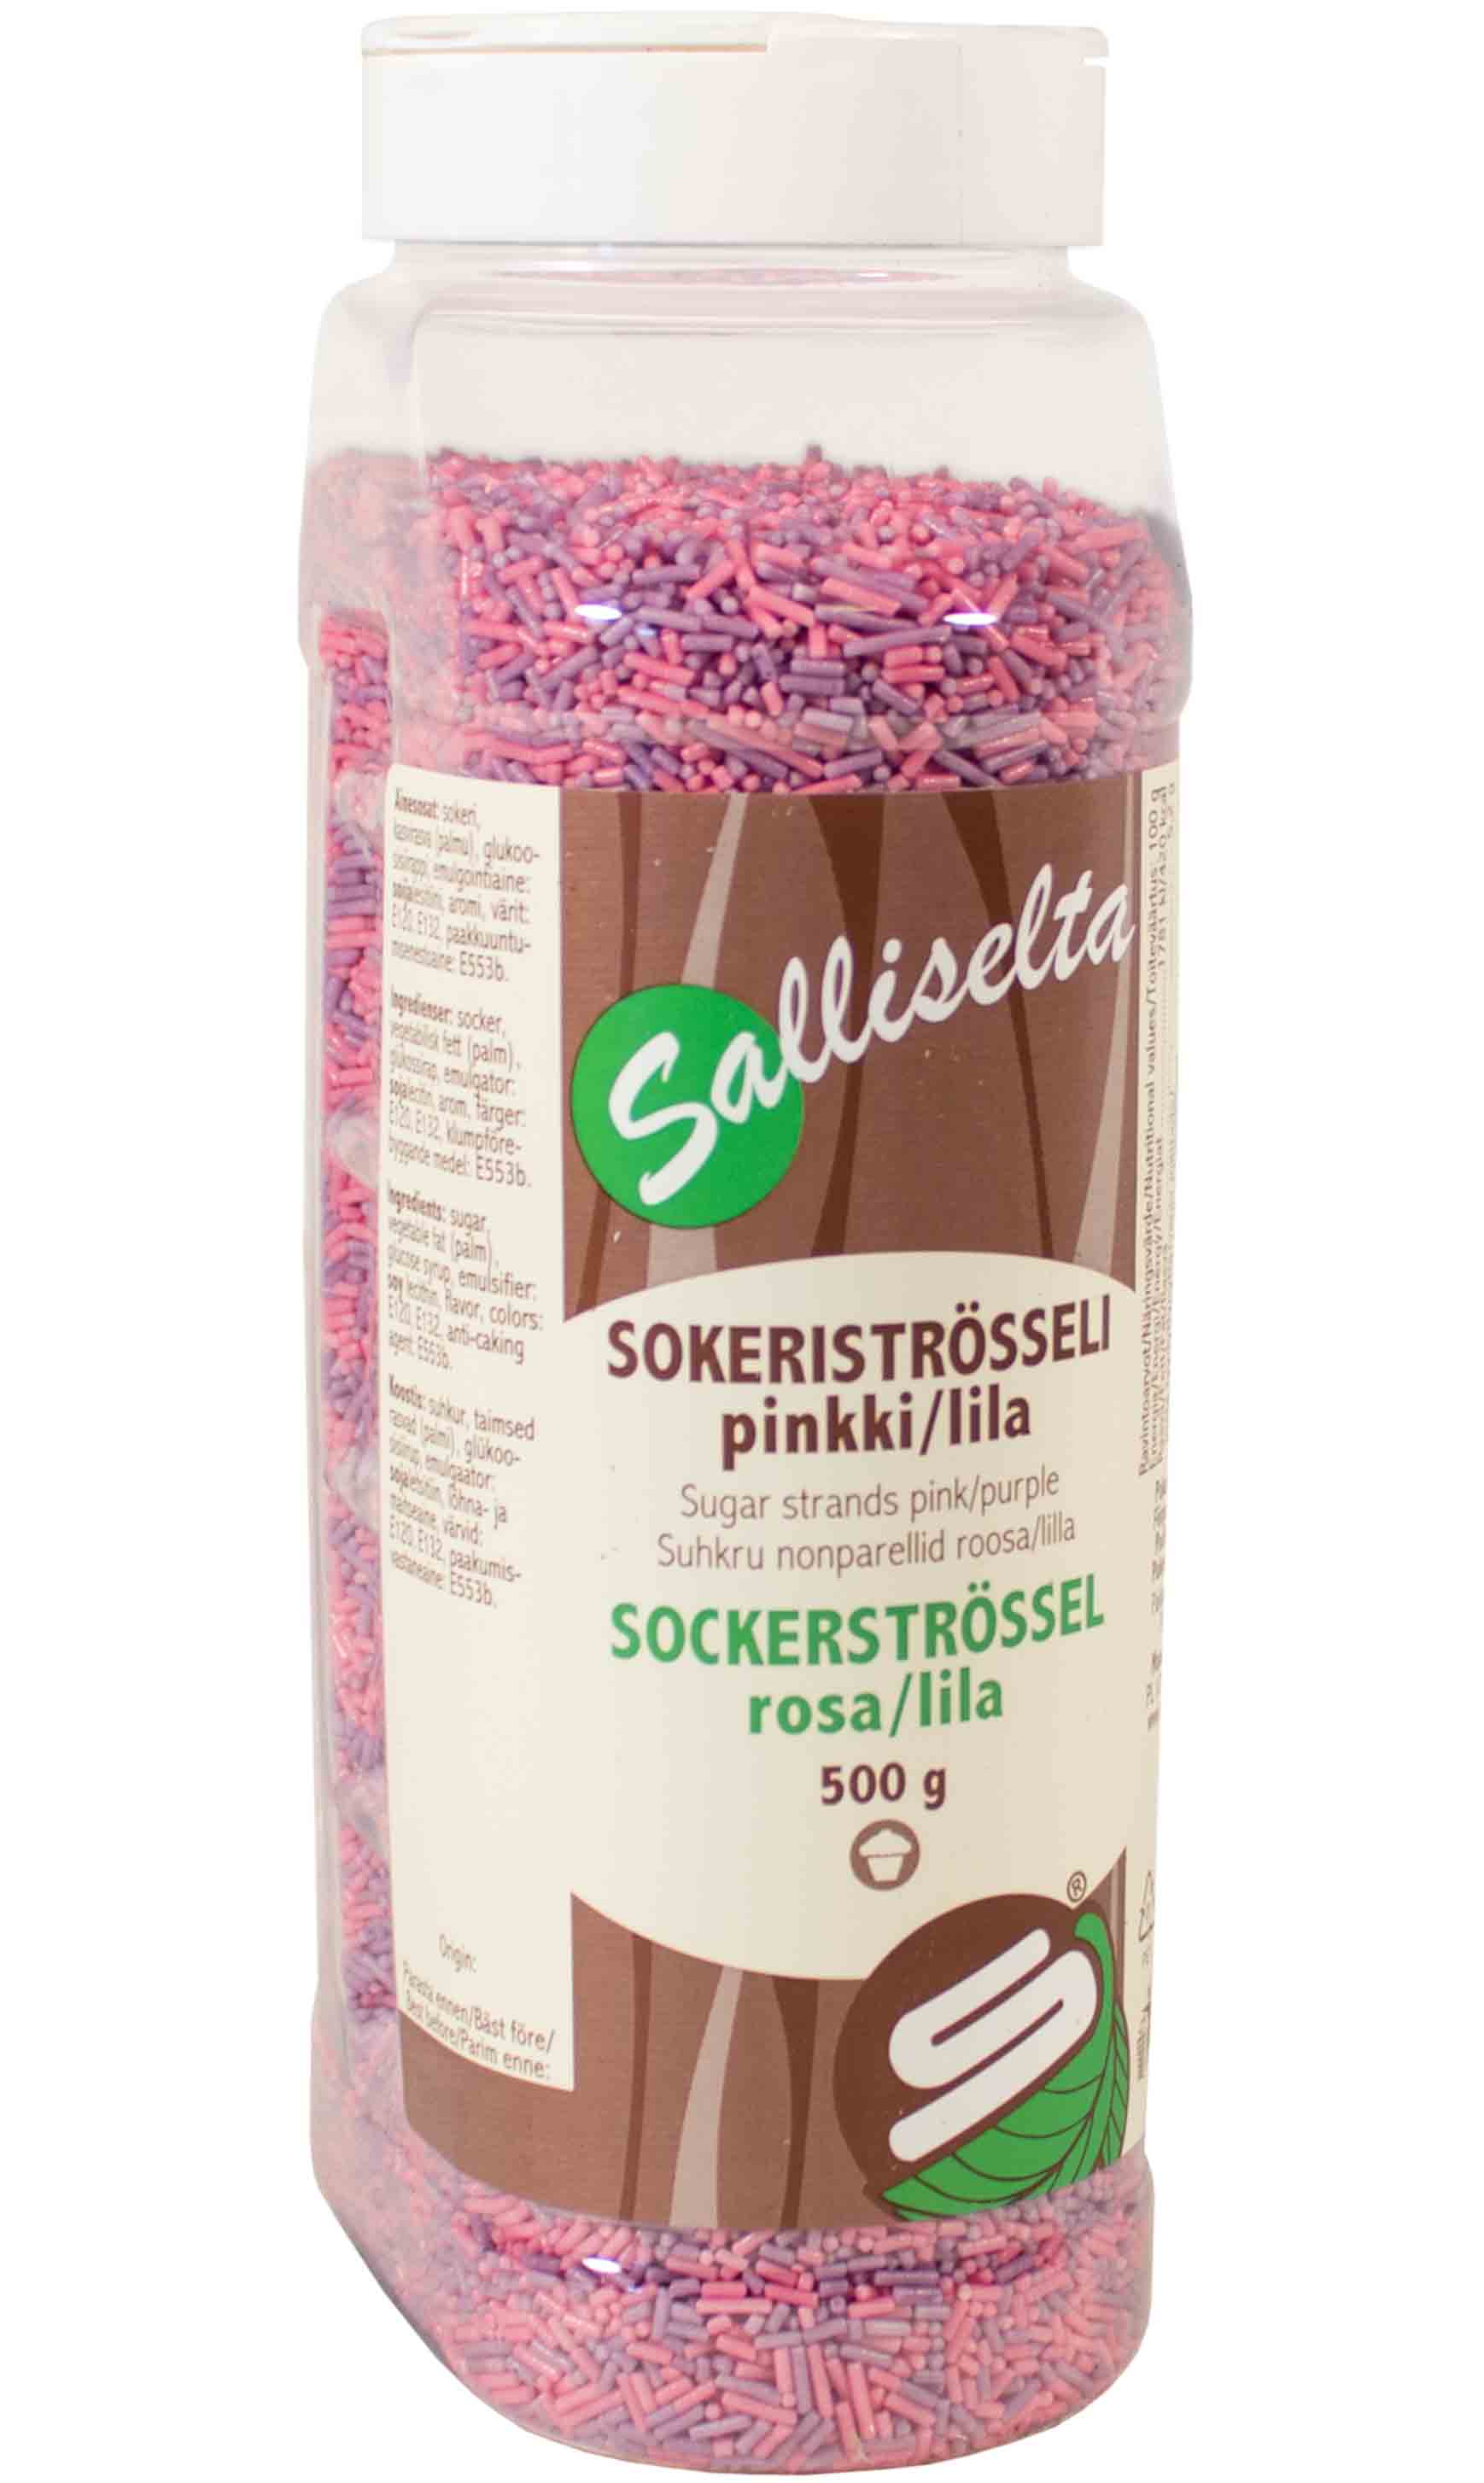 Sokeriströsseli pinkki/lila 500g